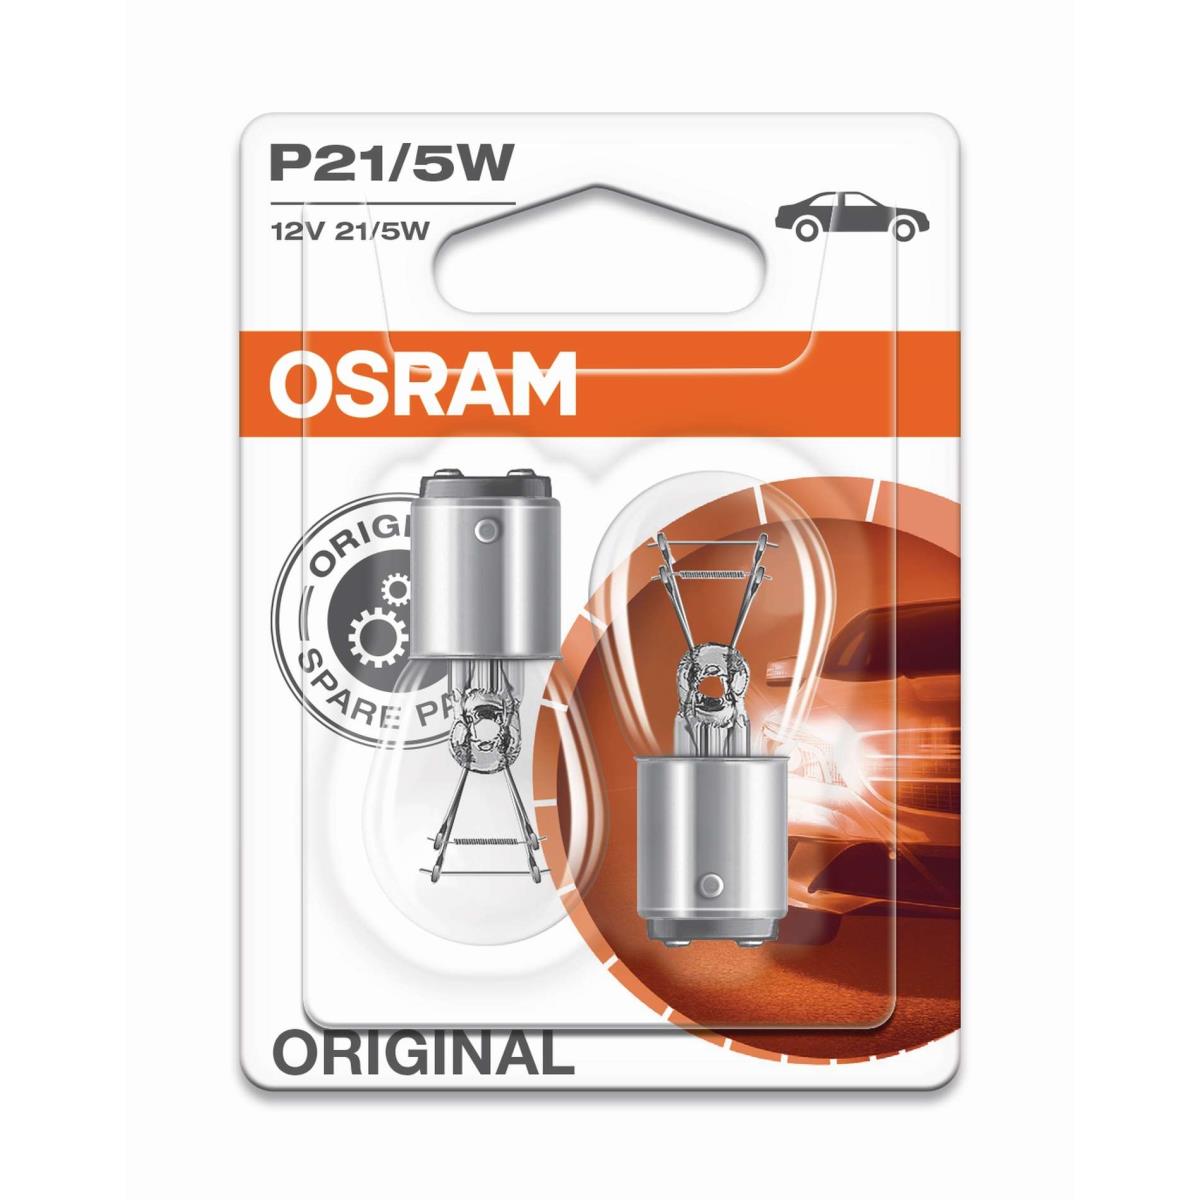 OSRAM P21/5W Lampe mit Metallsockel 12V 21/5W Sockel BAY15d